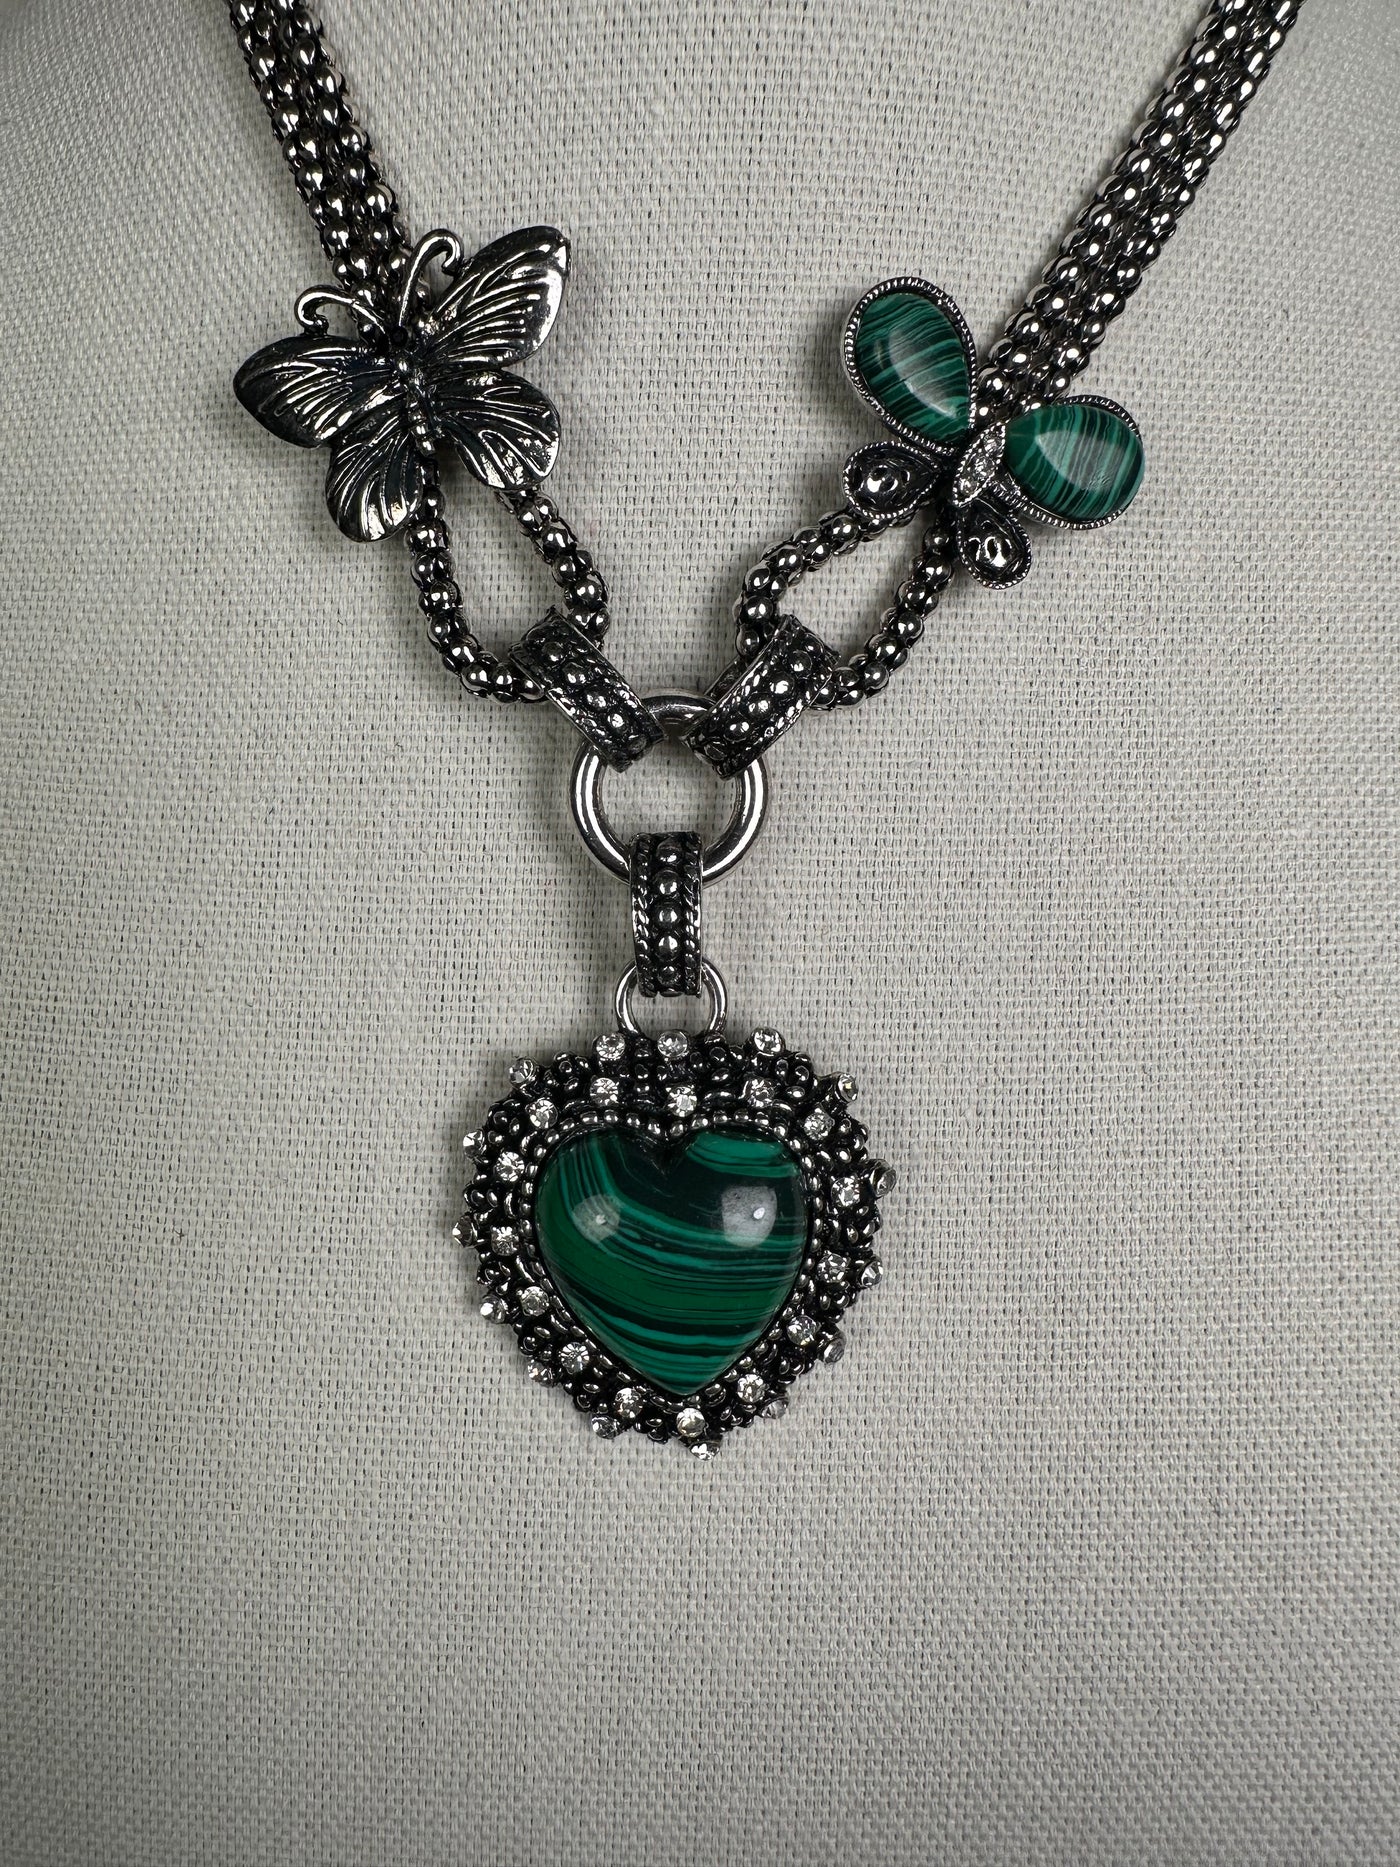 Silver Tone Necklace Featuring a Howlite Malachite Heart Pendant